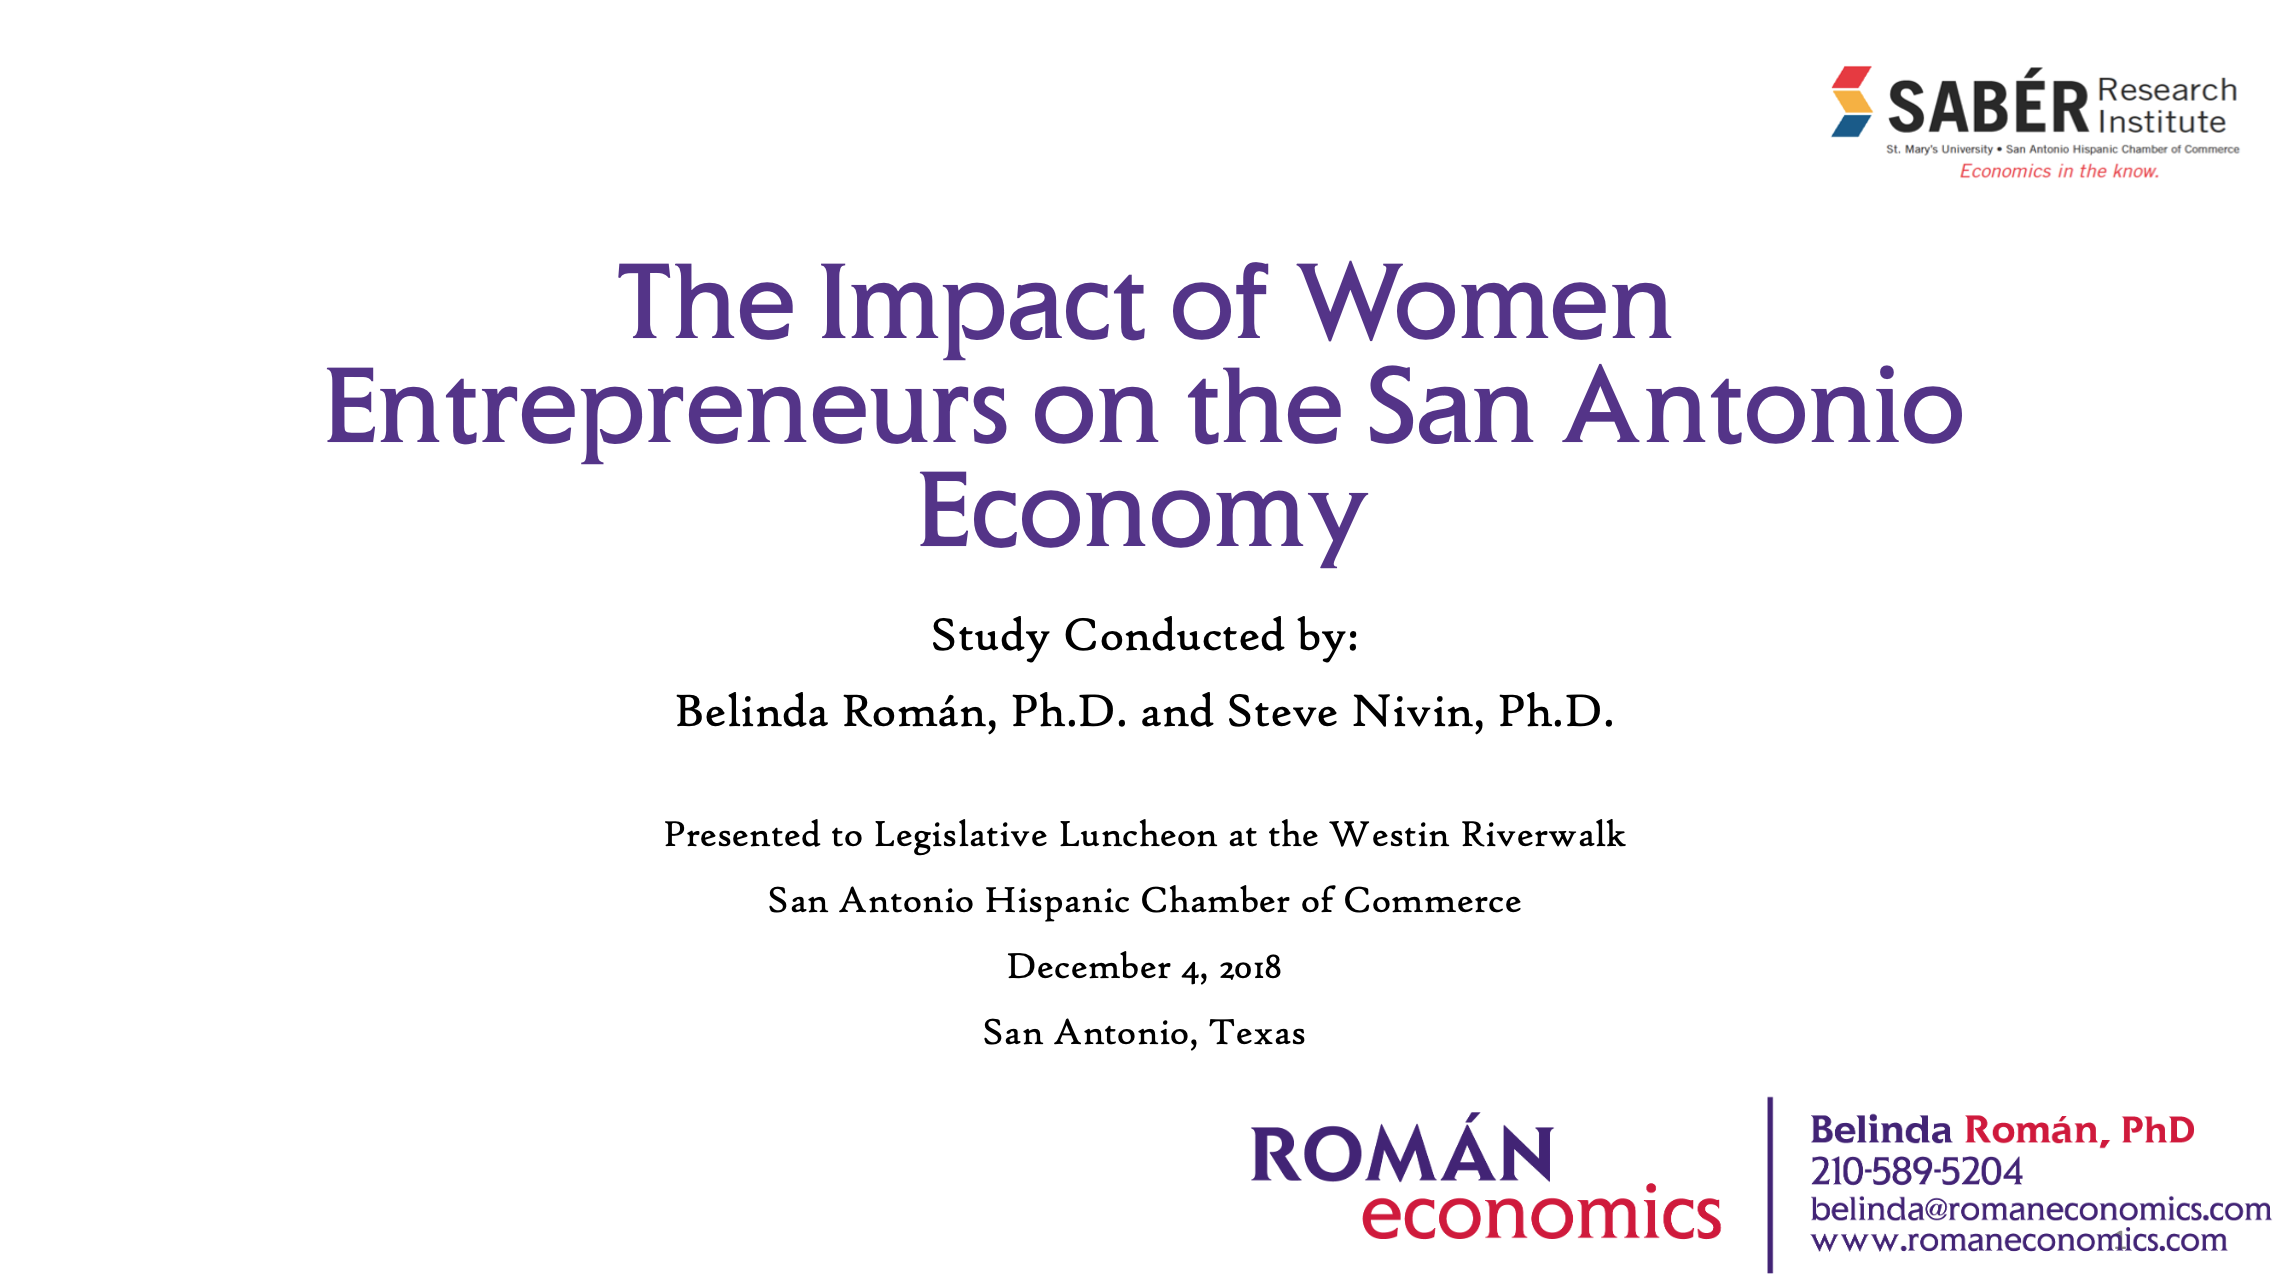 The Impact of Women Entrepreneurs on the San Antonio Economy